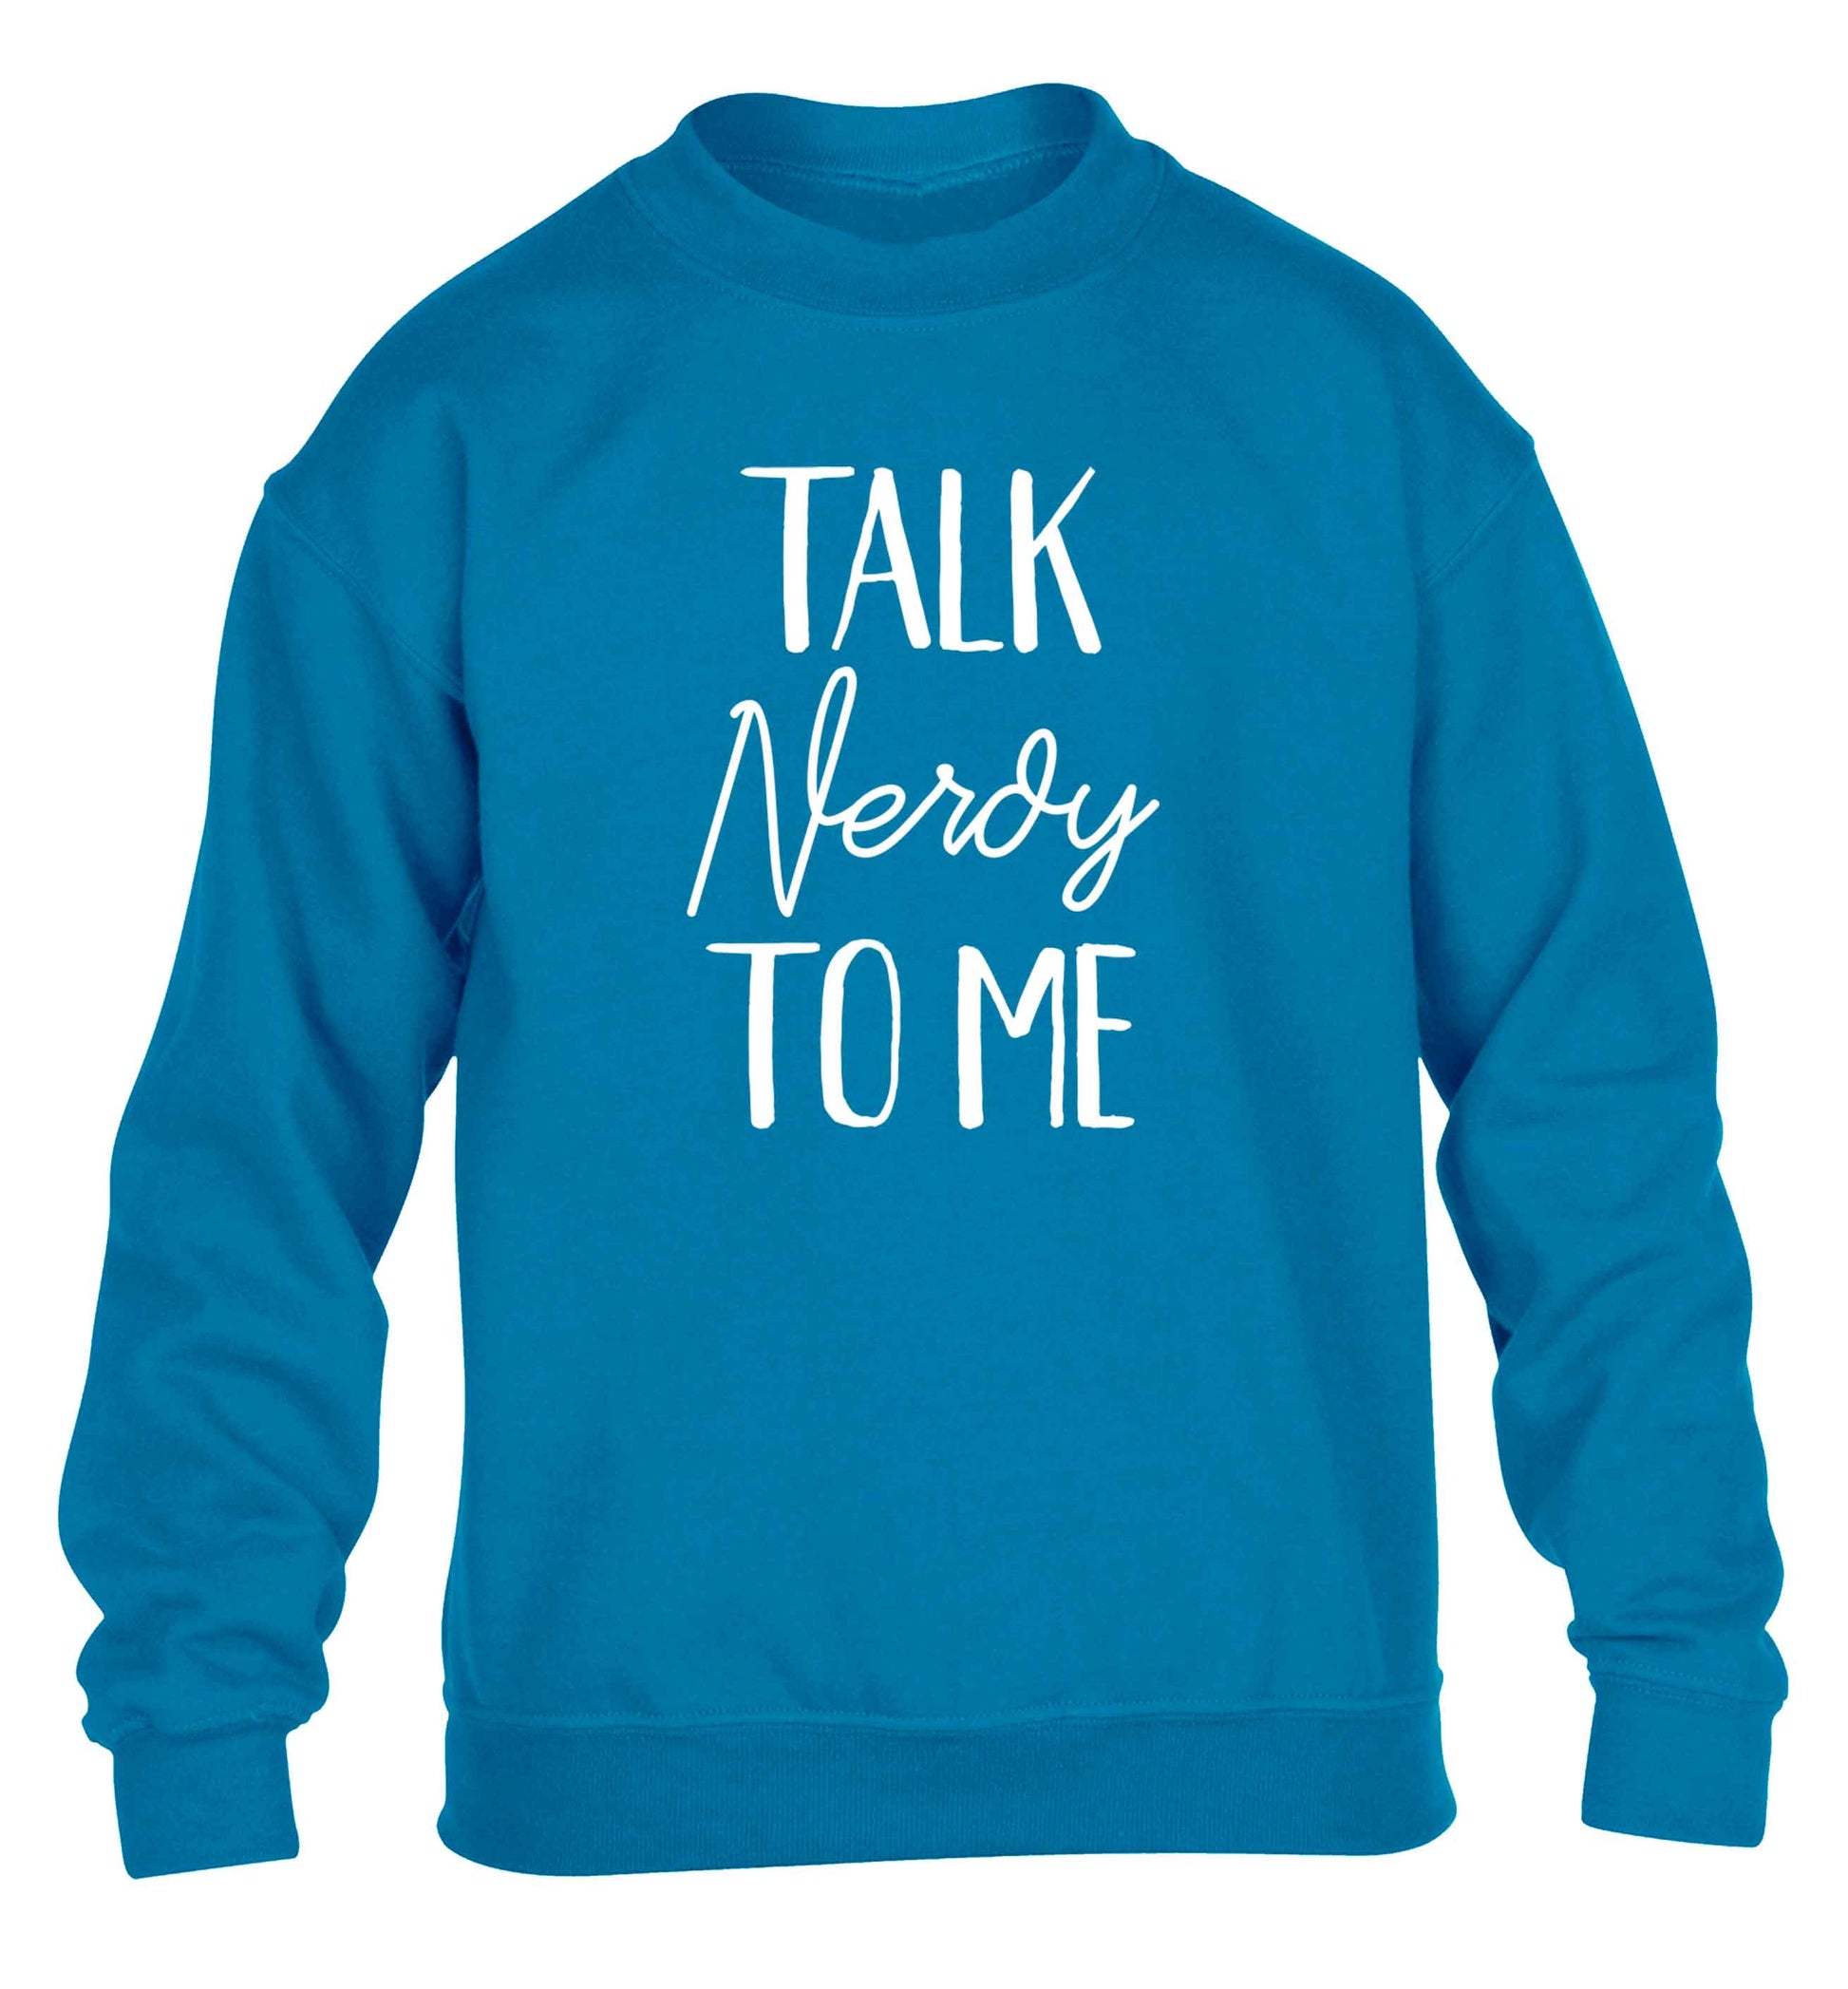 Talk nerdy to me children's blue sweater 12-13 Years